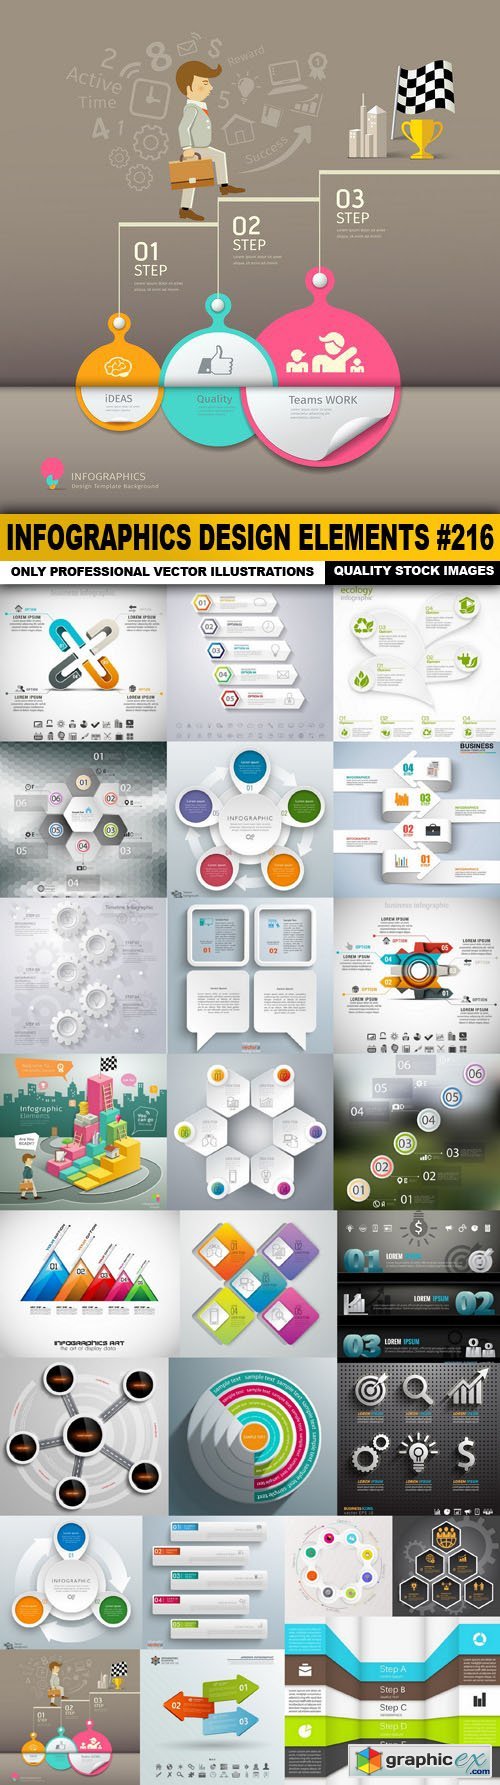 Infographics Design Elements #216 - 25 Vector